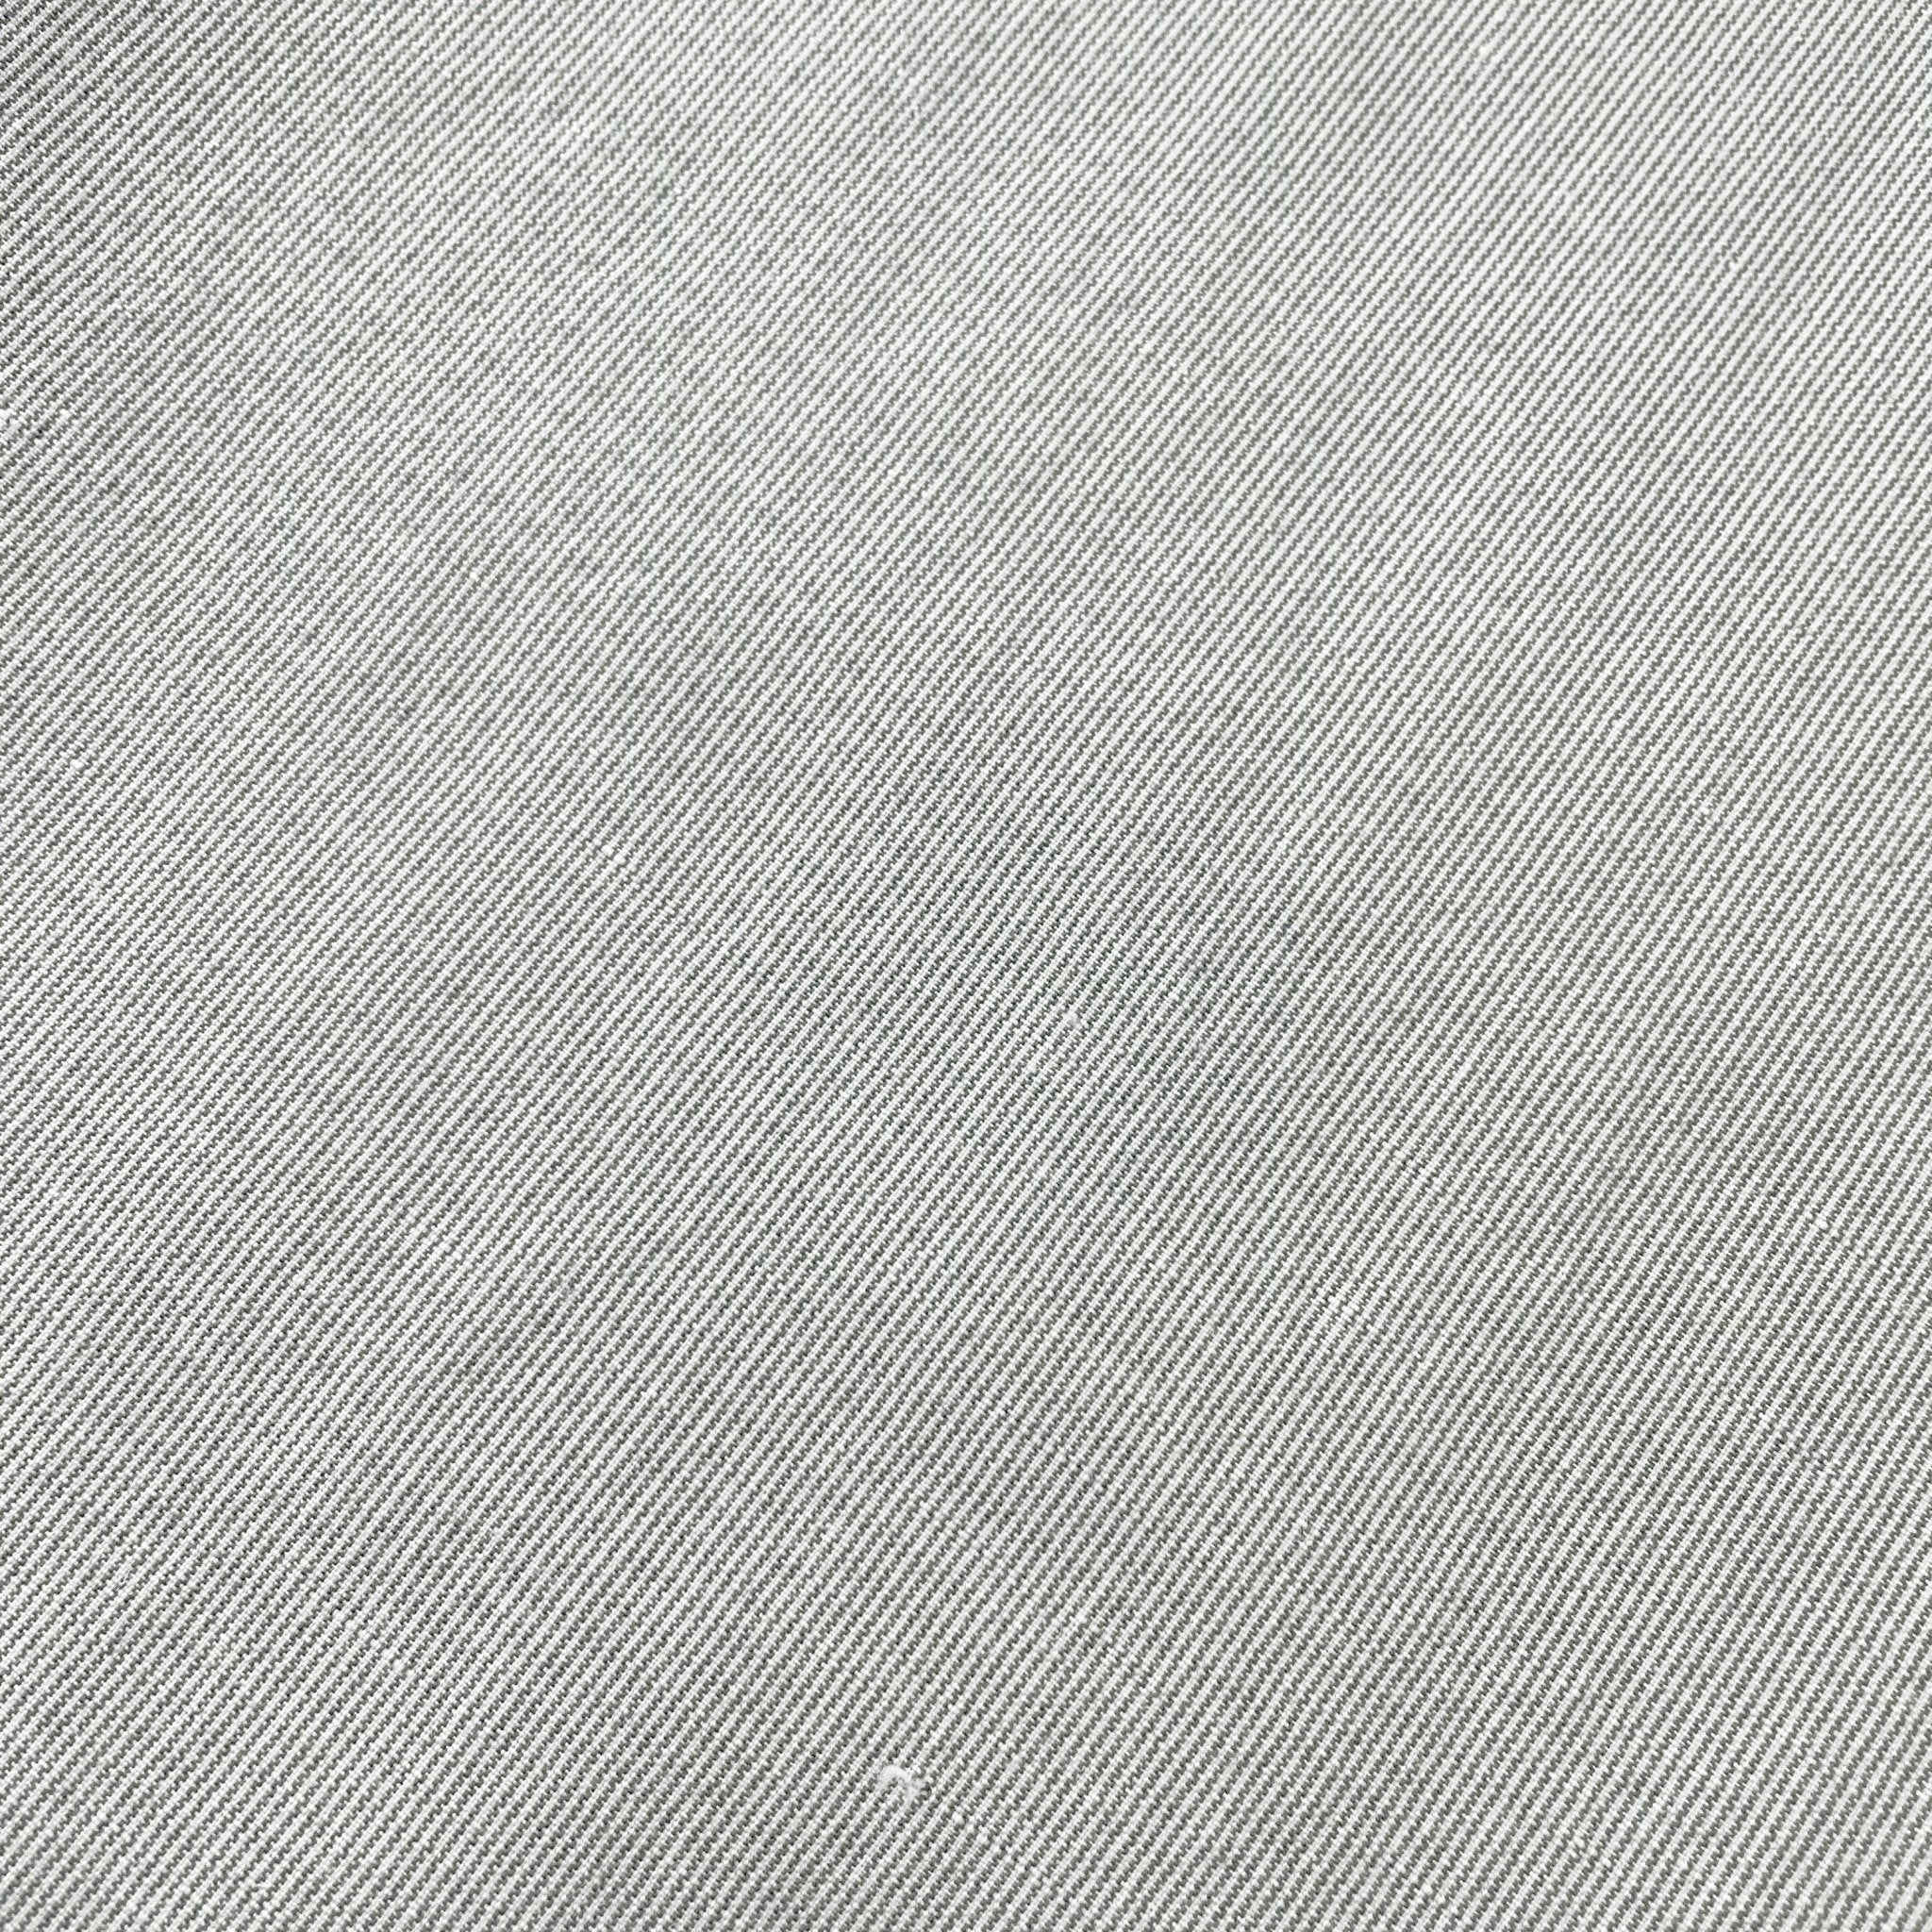 Linen Cotton Stripe Fabric 7087 7088 - The Linen Lab - 7088 KHAKI